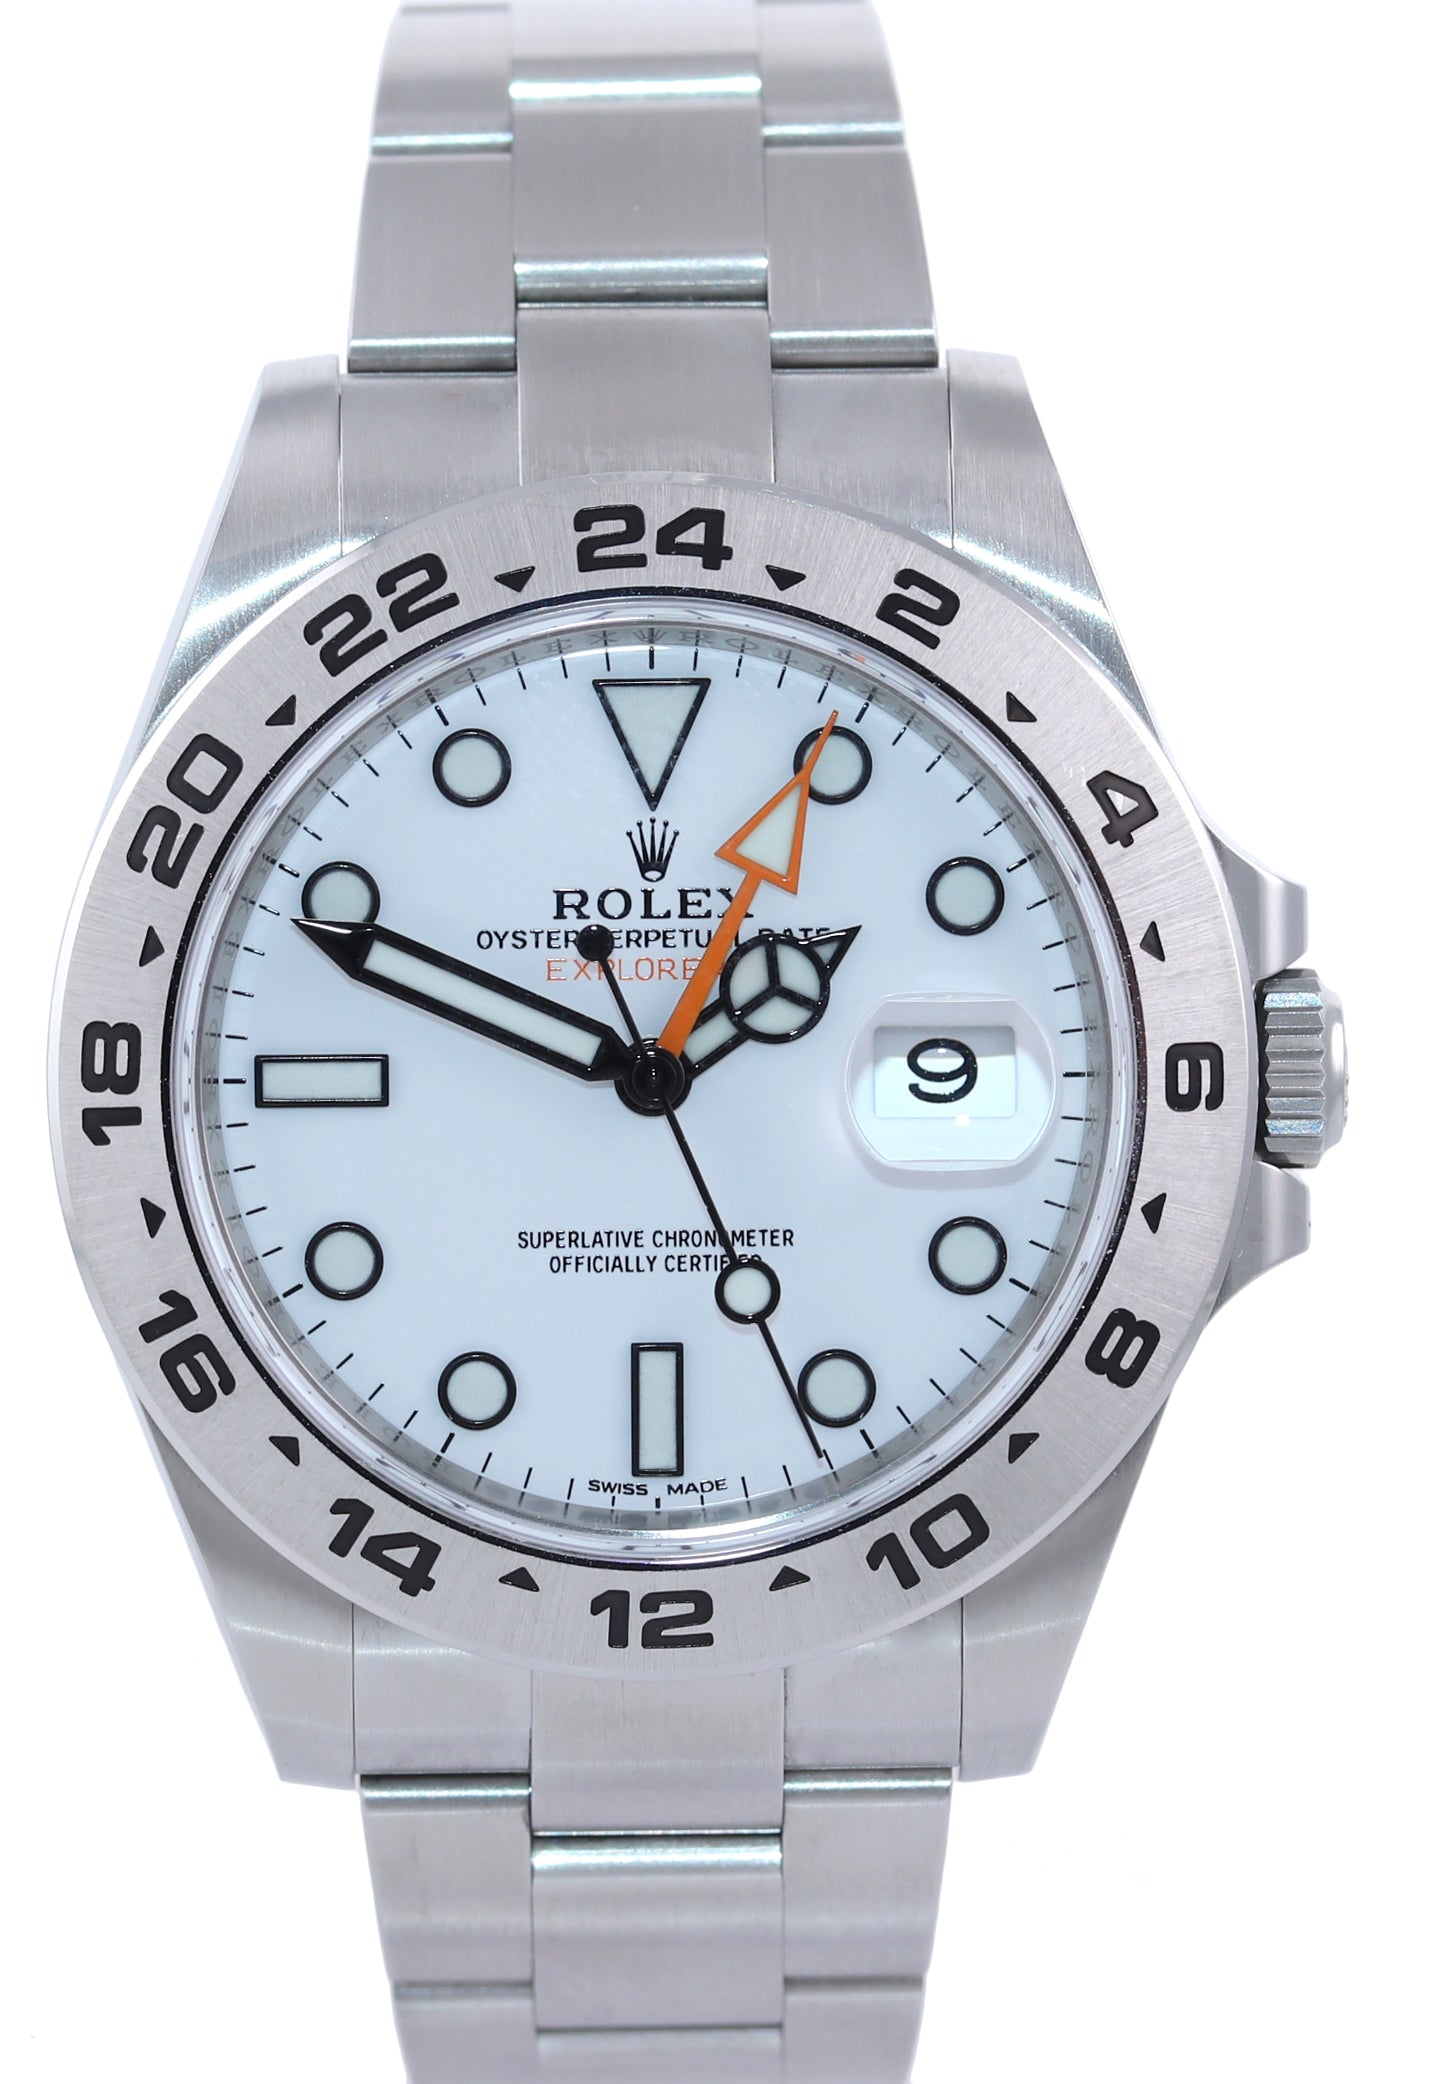 NEW PAPERS 2019 Rolex Explorer II 42mm 216570 White Polar Steel GMT Date Watch